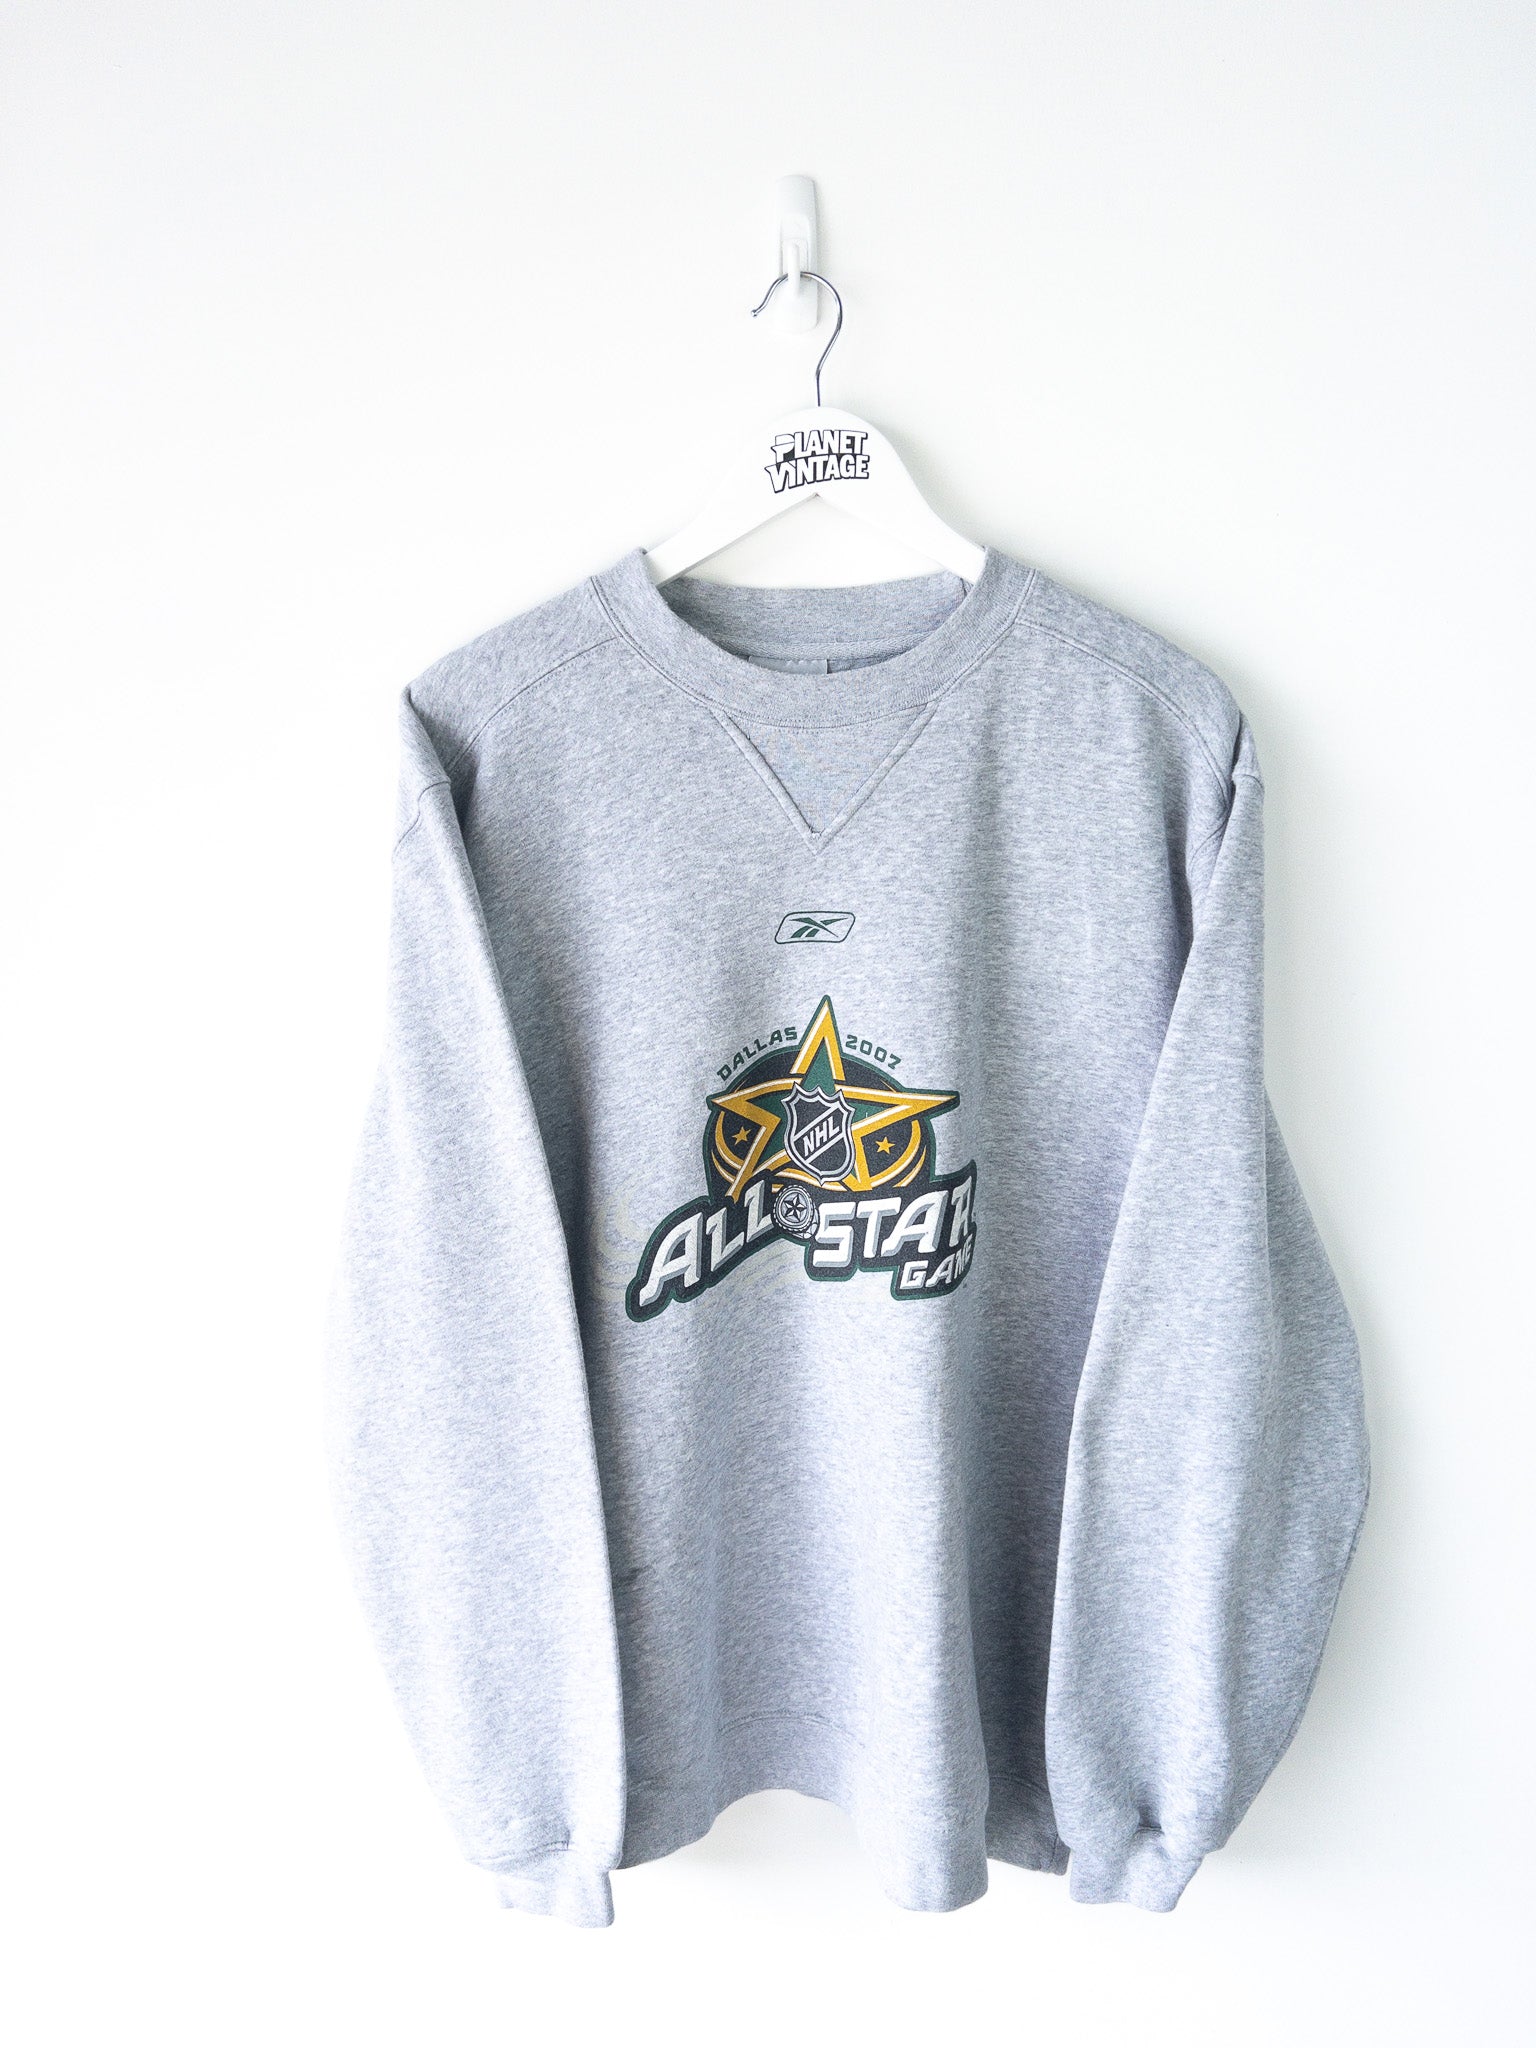 Vintage NHL Dallas All Star Game Sweatshirt (L)